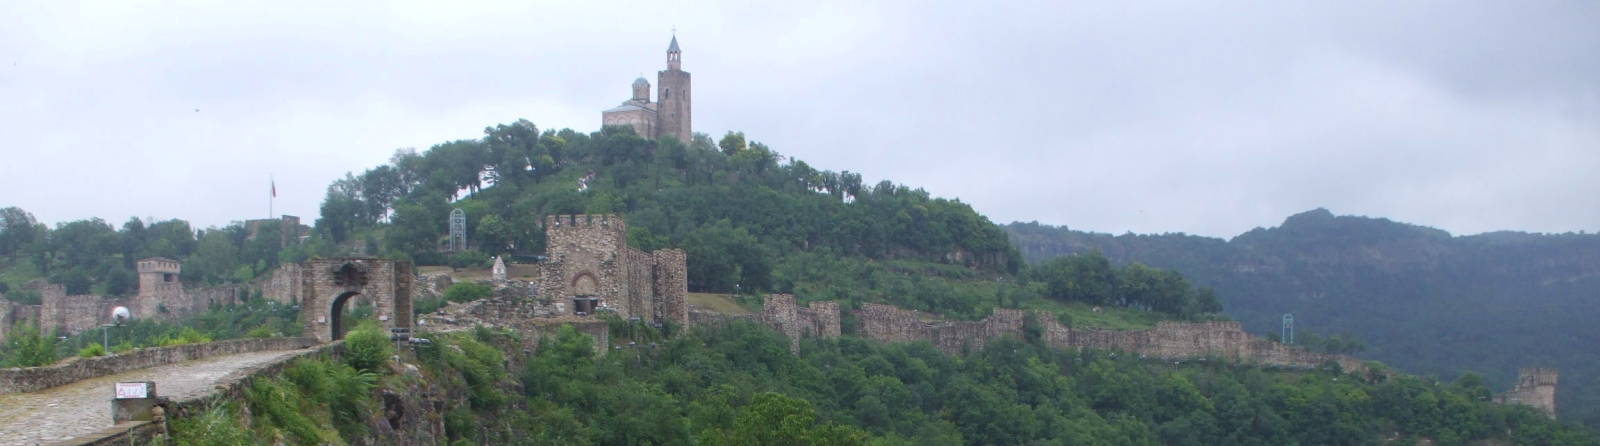 Tsarevets fortress overlooking Veliko Tarnovo, Bulgaria.